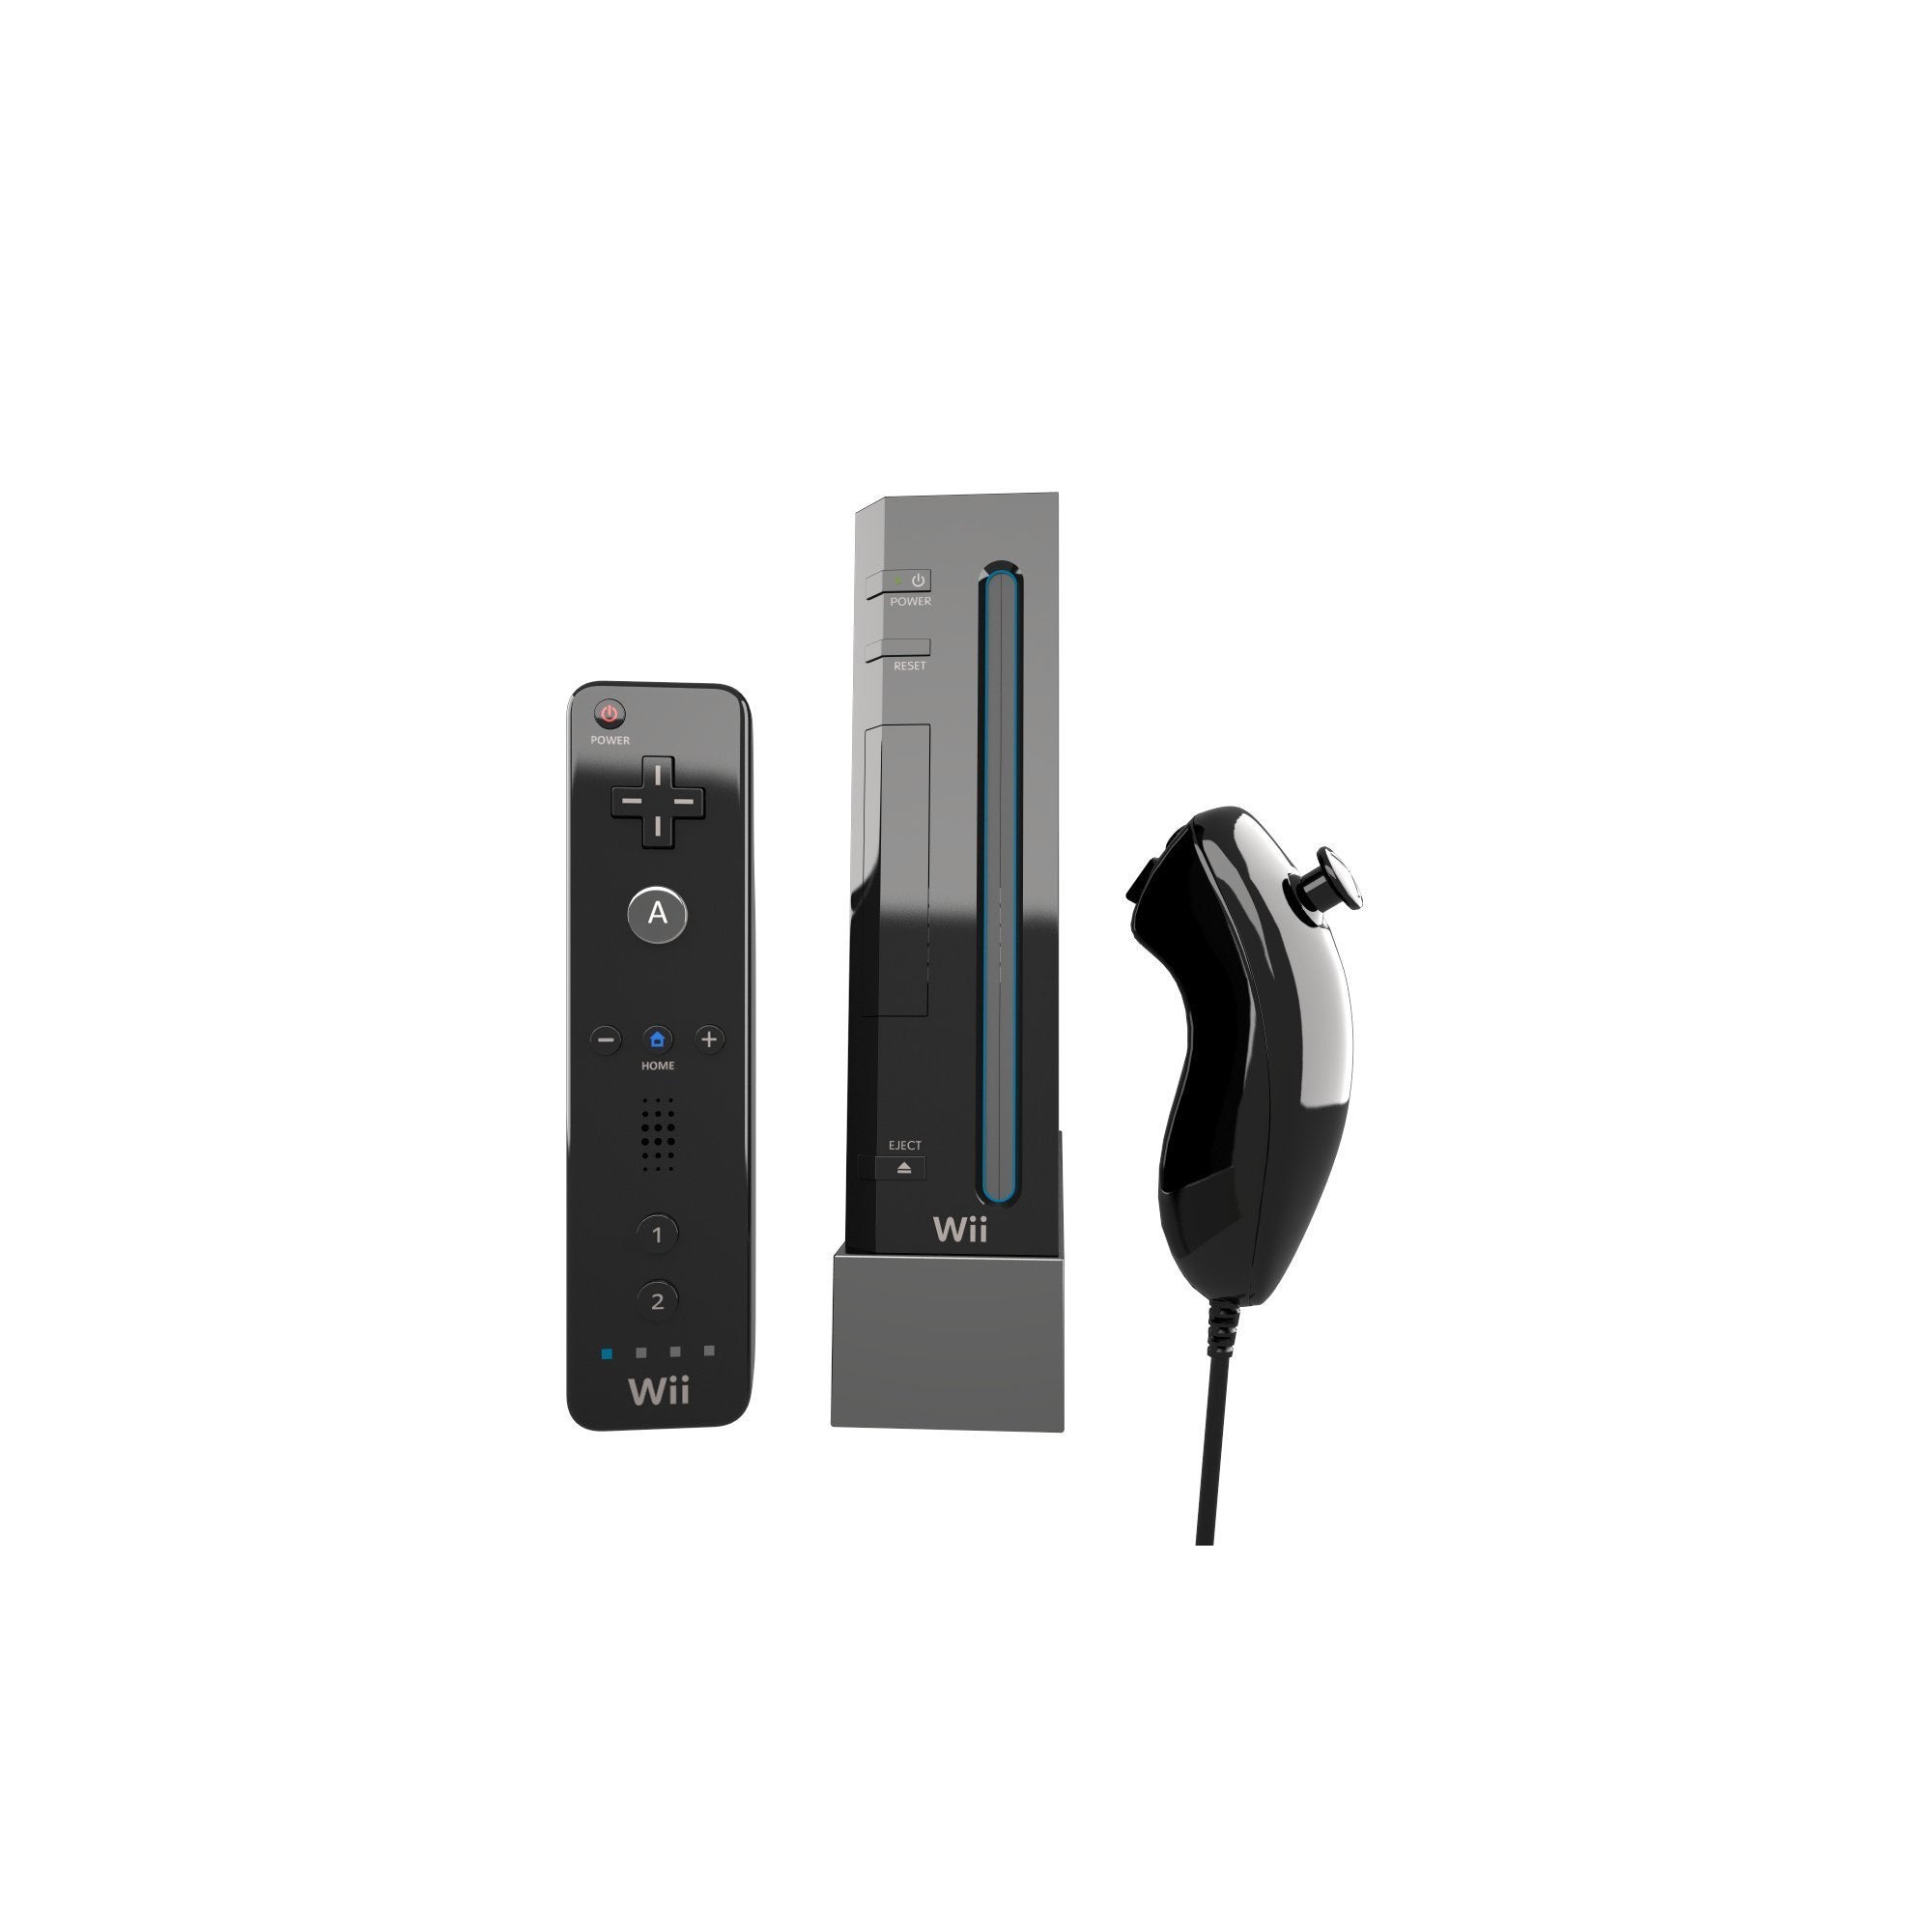 Nintendo Wii RVL-101 Wii Console Black